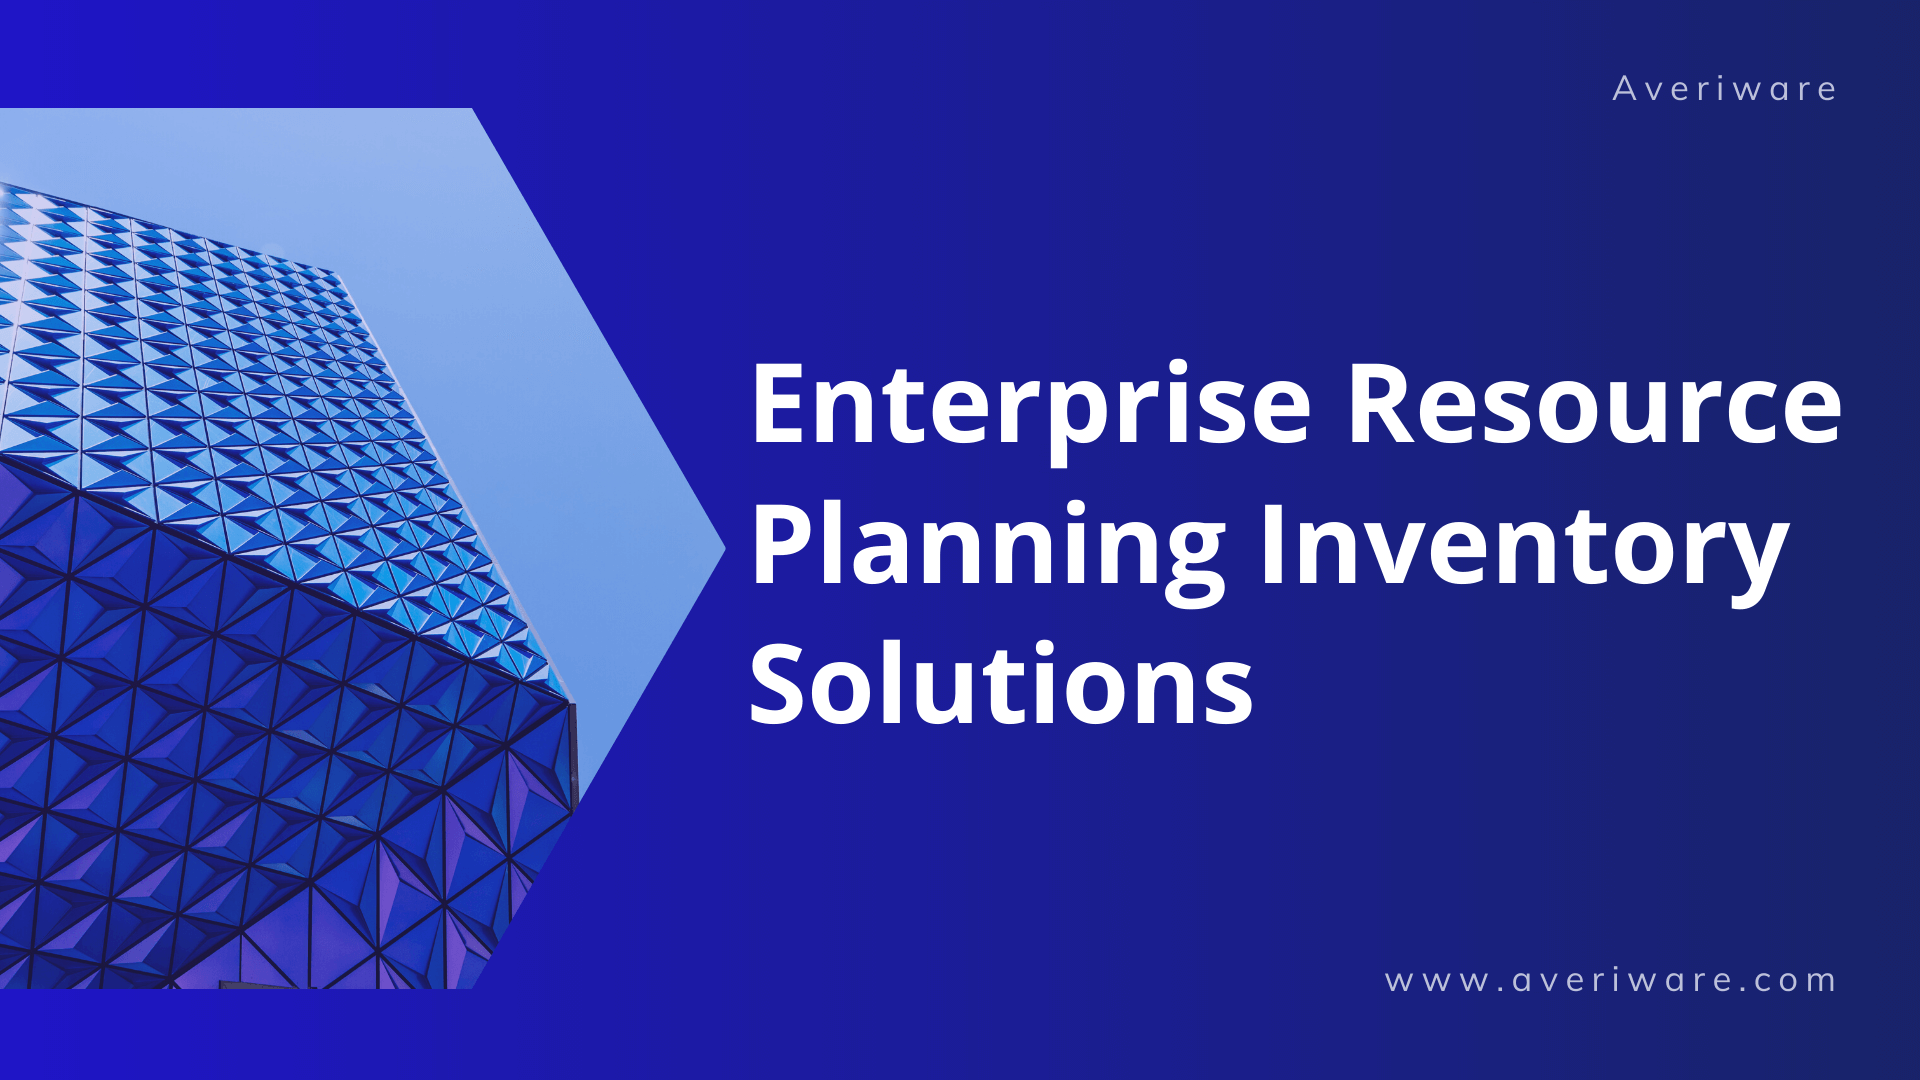 Averiware: Enterprise Recourse Planning Inventory Solutions